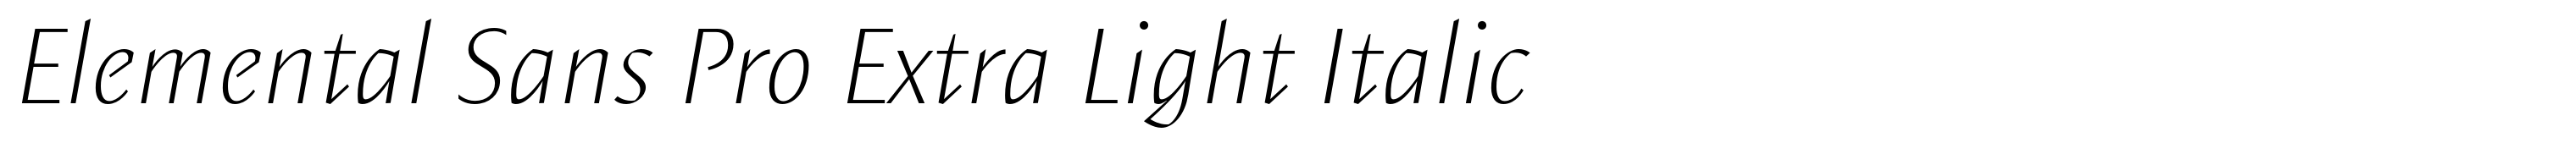 Elemental Sans Pro Extra Light Italic